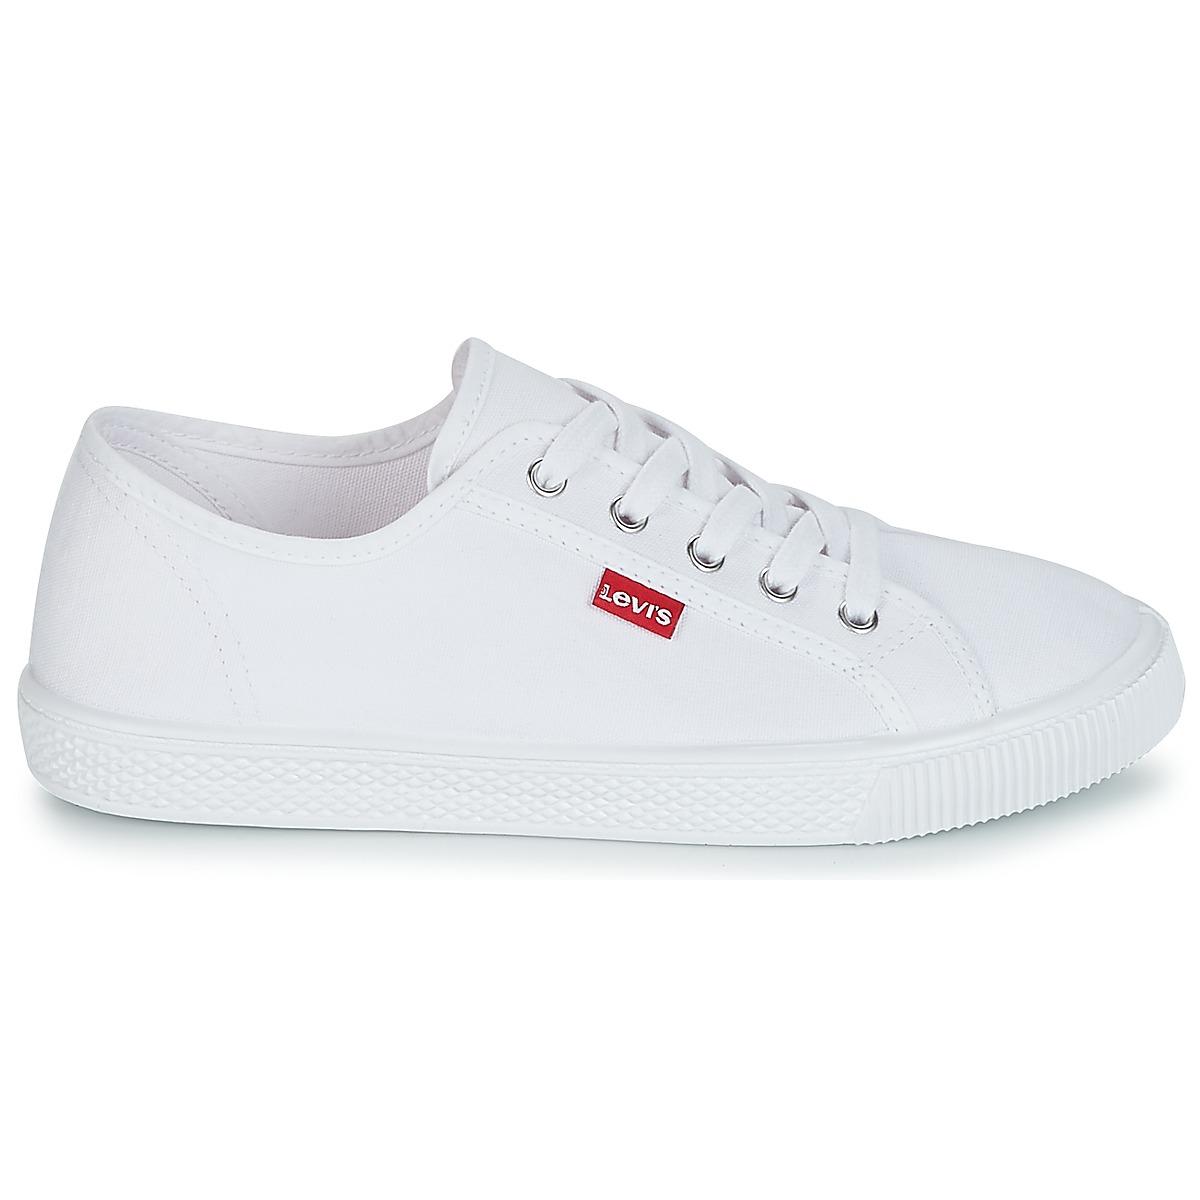 Levi's Levis Malibu Beach S Shoes in White (b White 50) (White) - Save 31% -